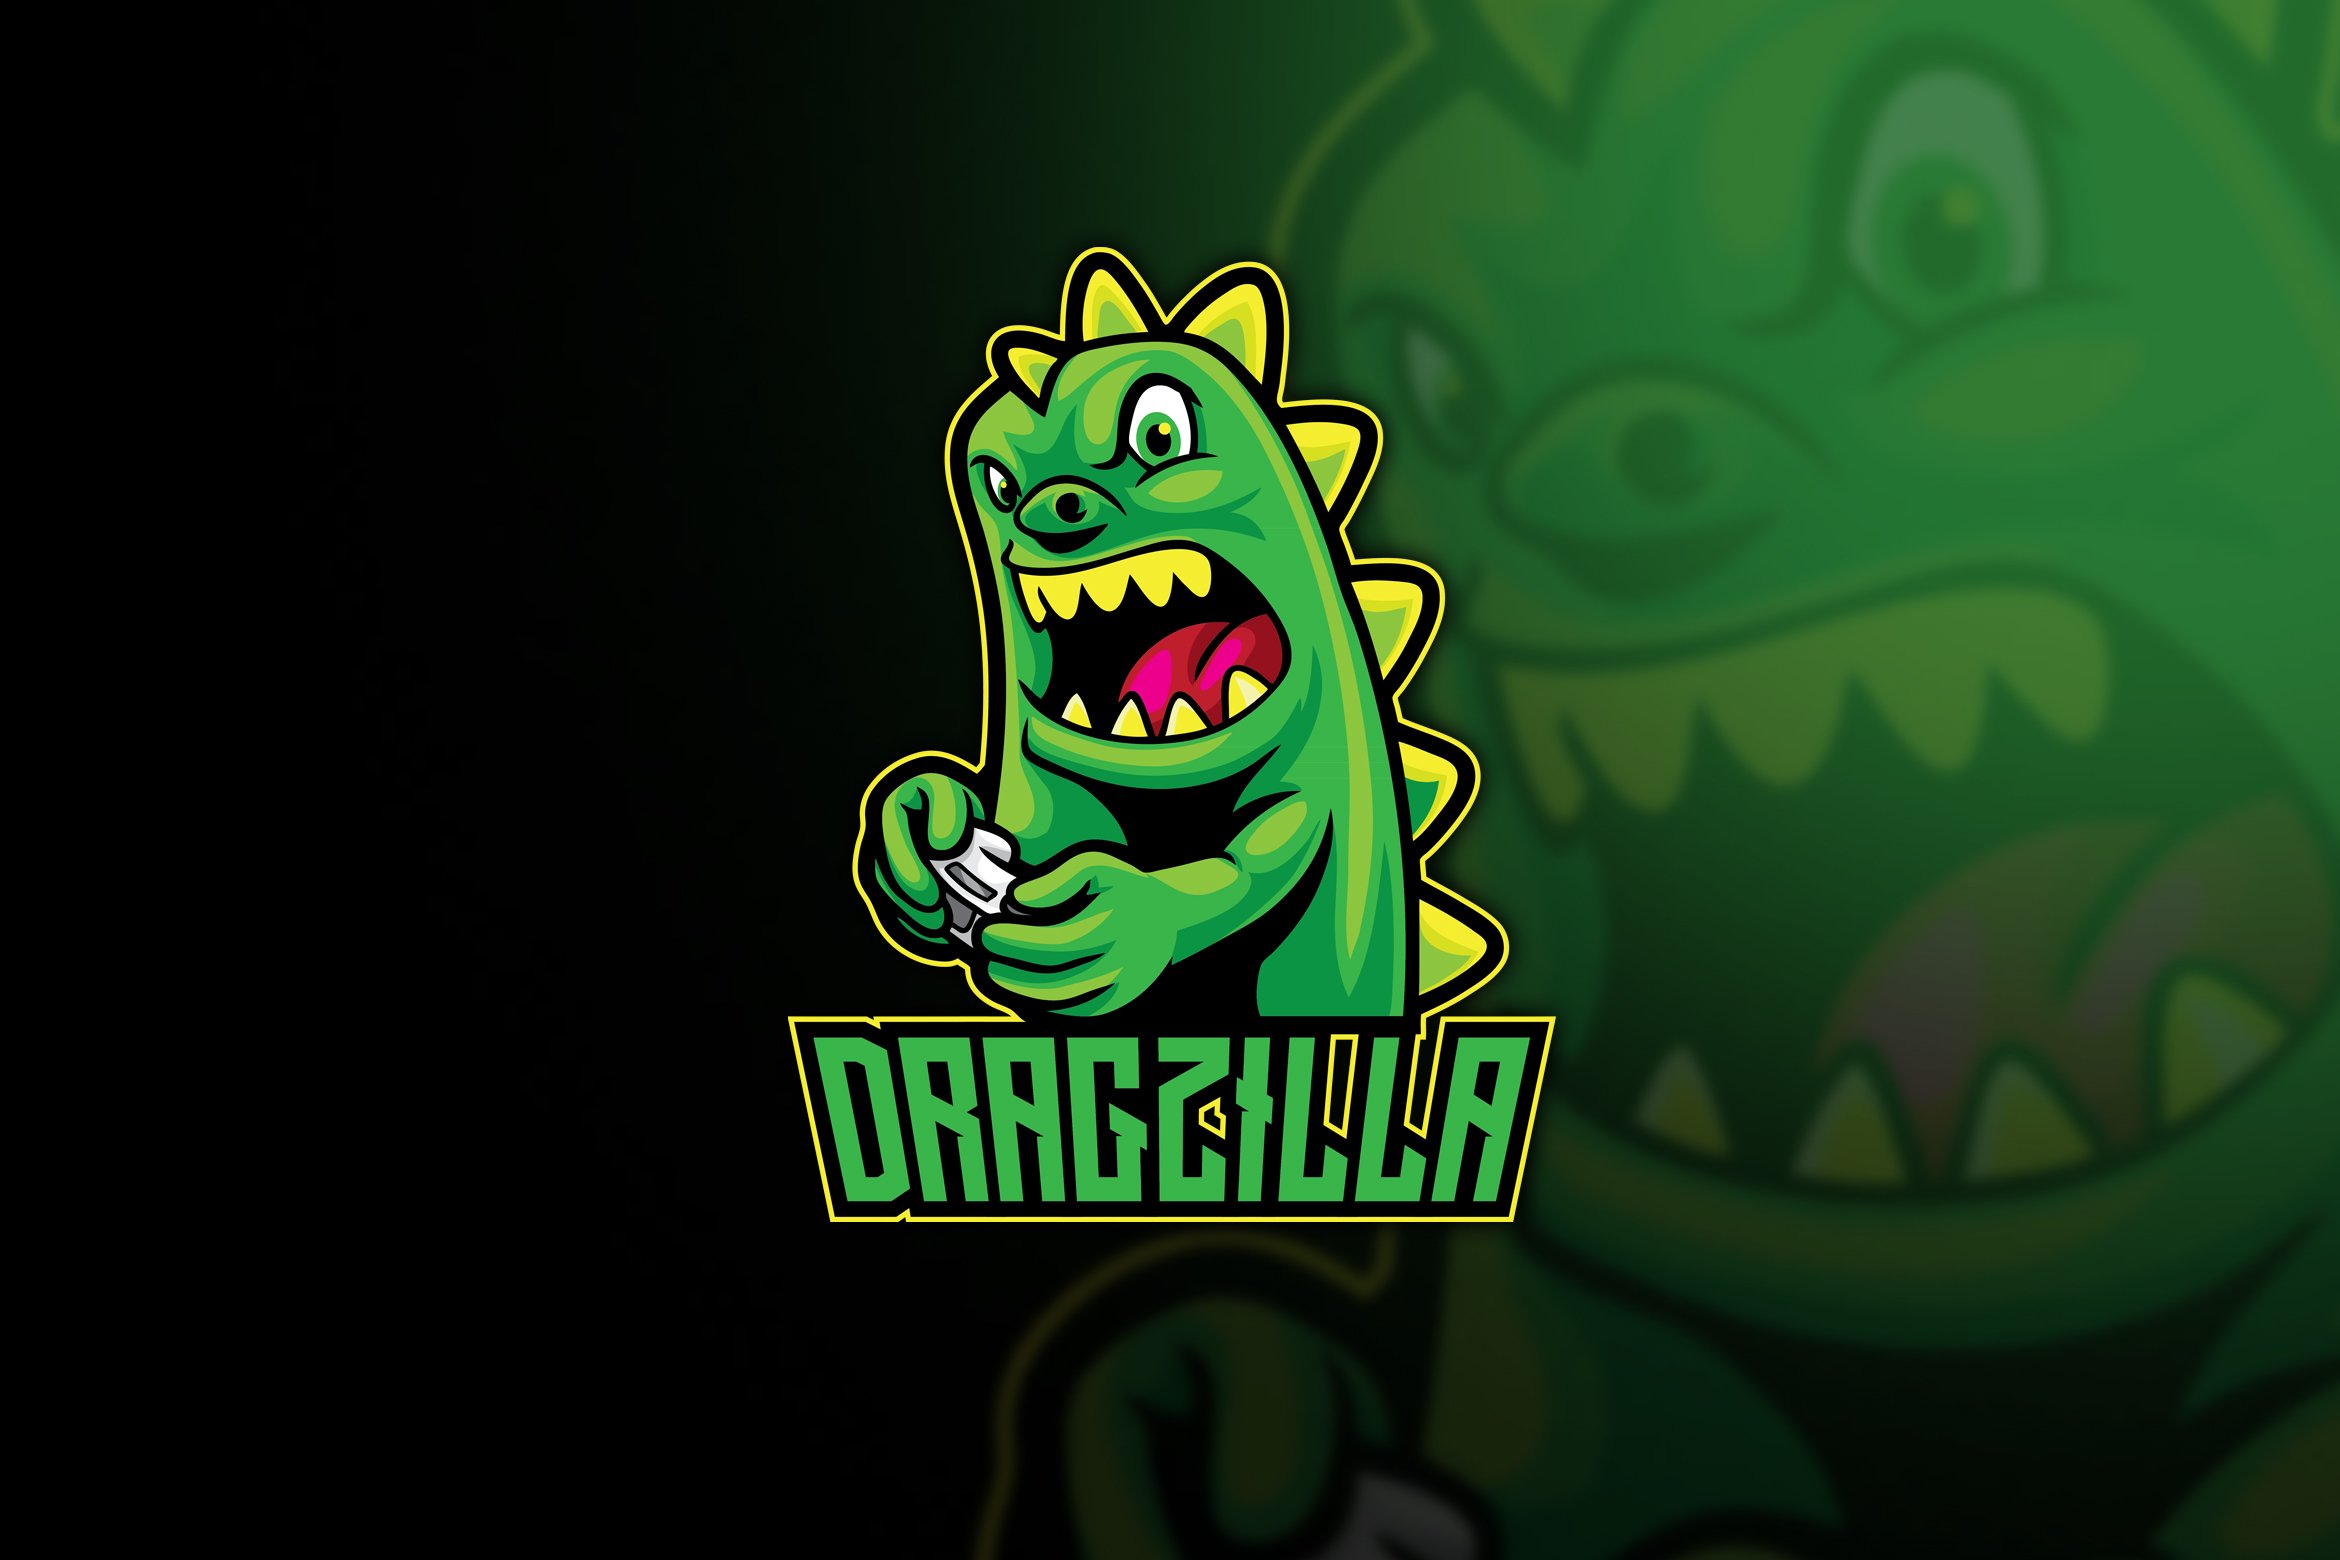 Dragonzilla Esport Logo cover image.